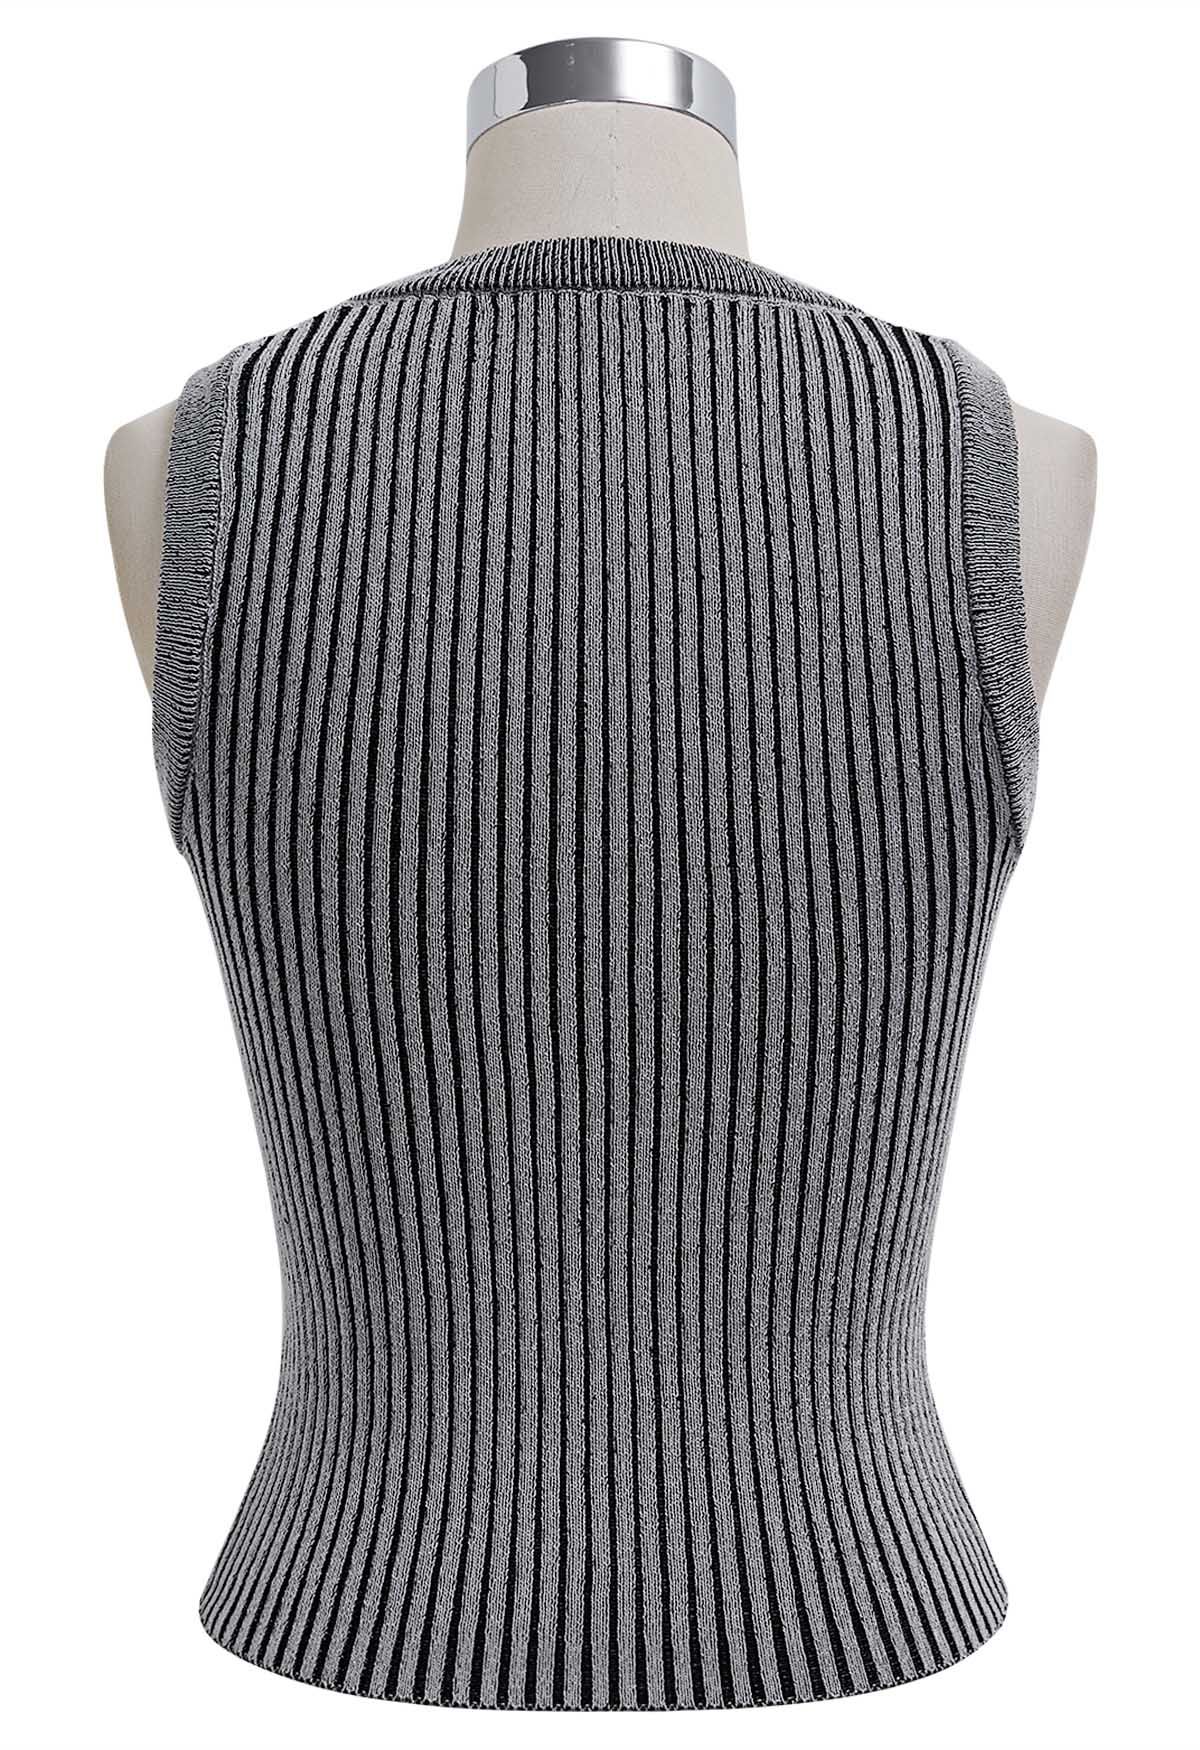 Stripe Texture Knit Tank Top in Grey